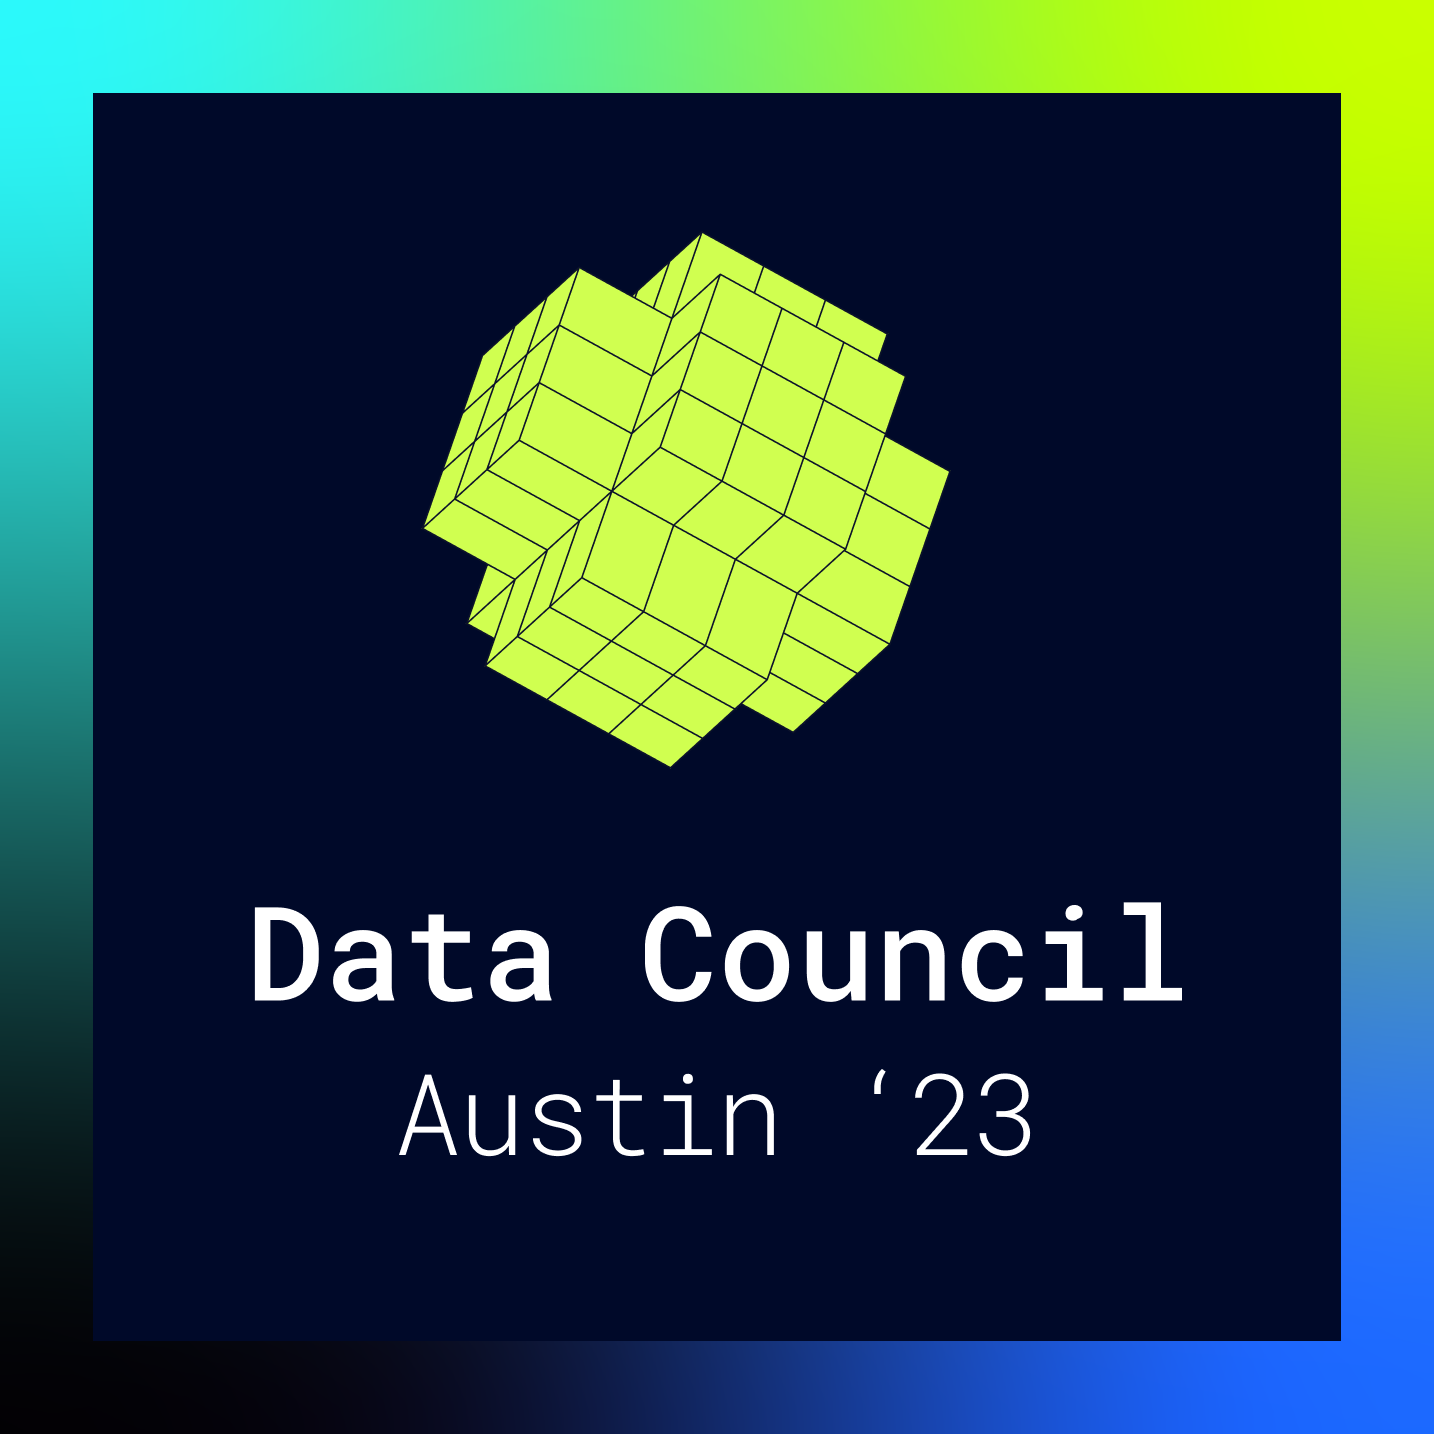 Data Council Austin 2023